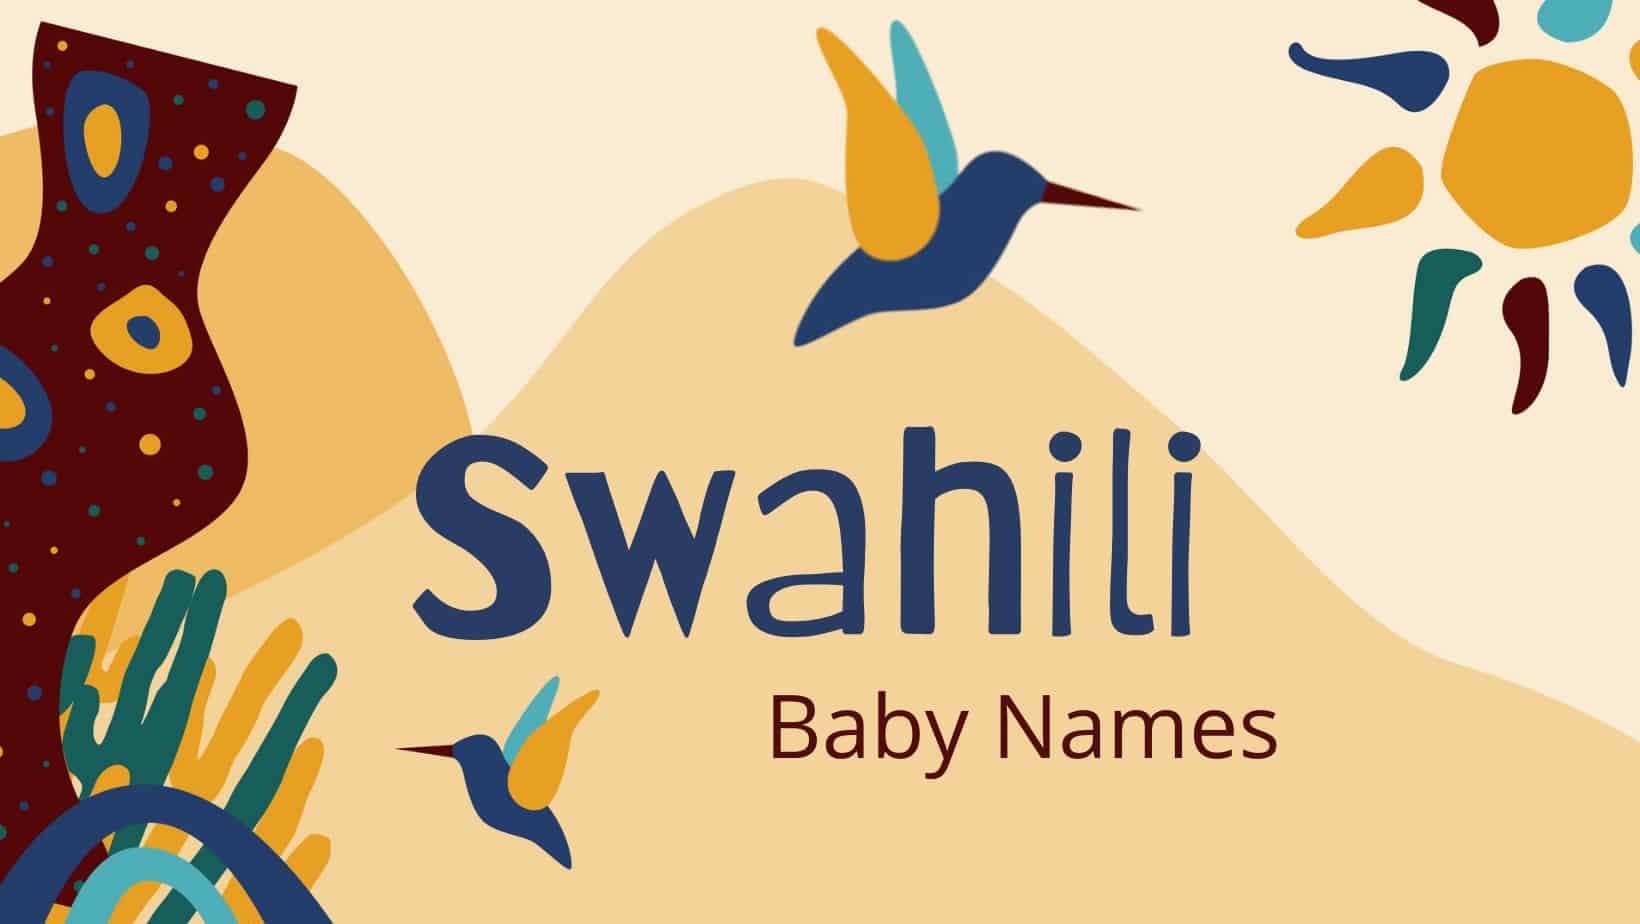 Swahili baby names